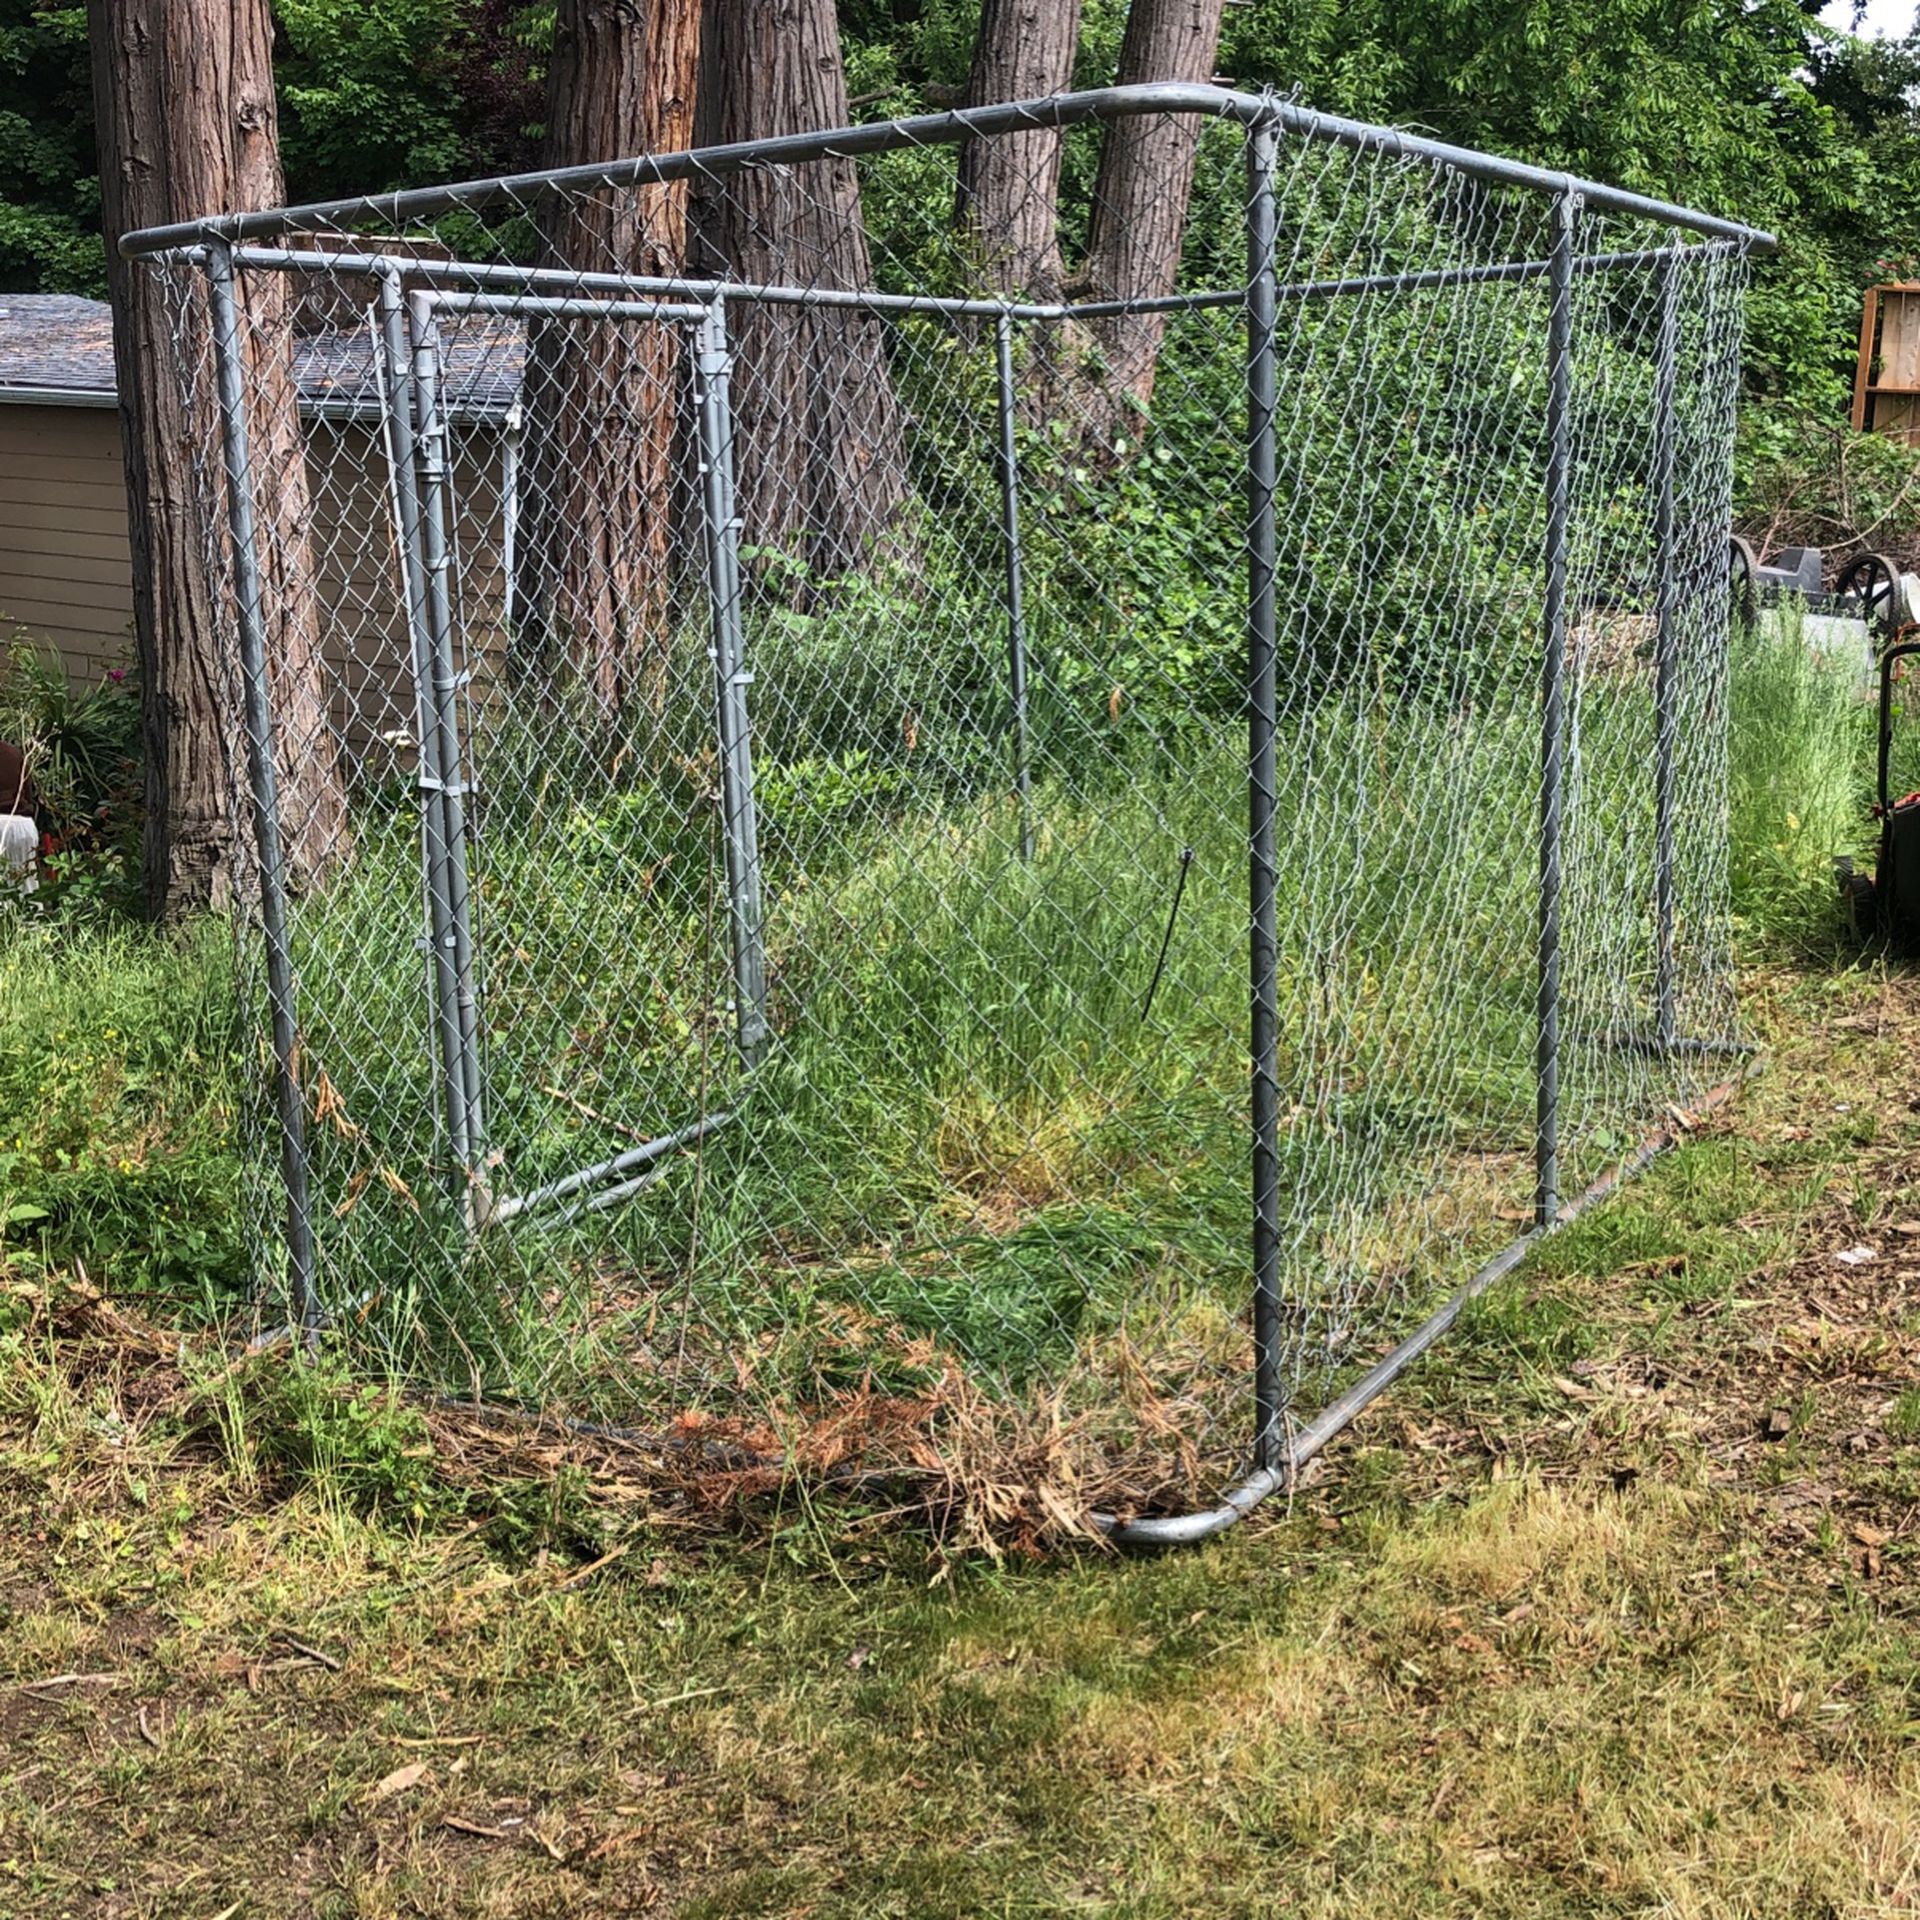 Dog / Animal Cage